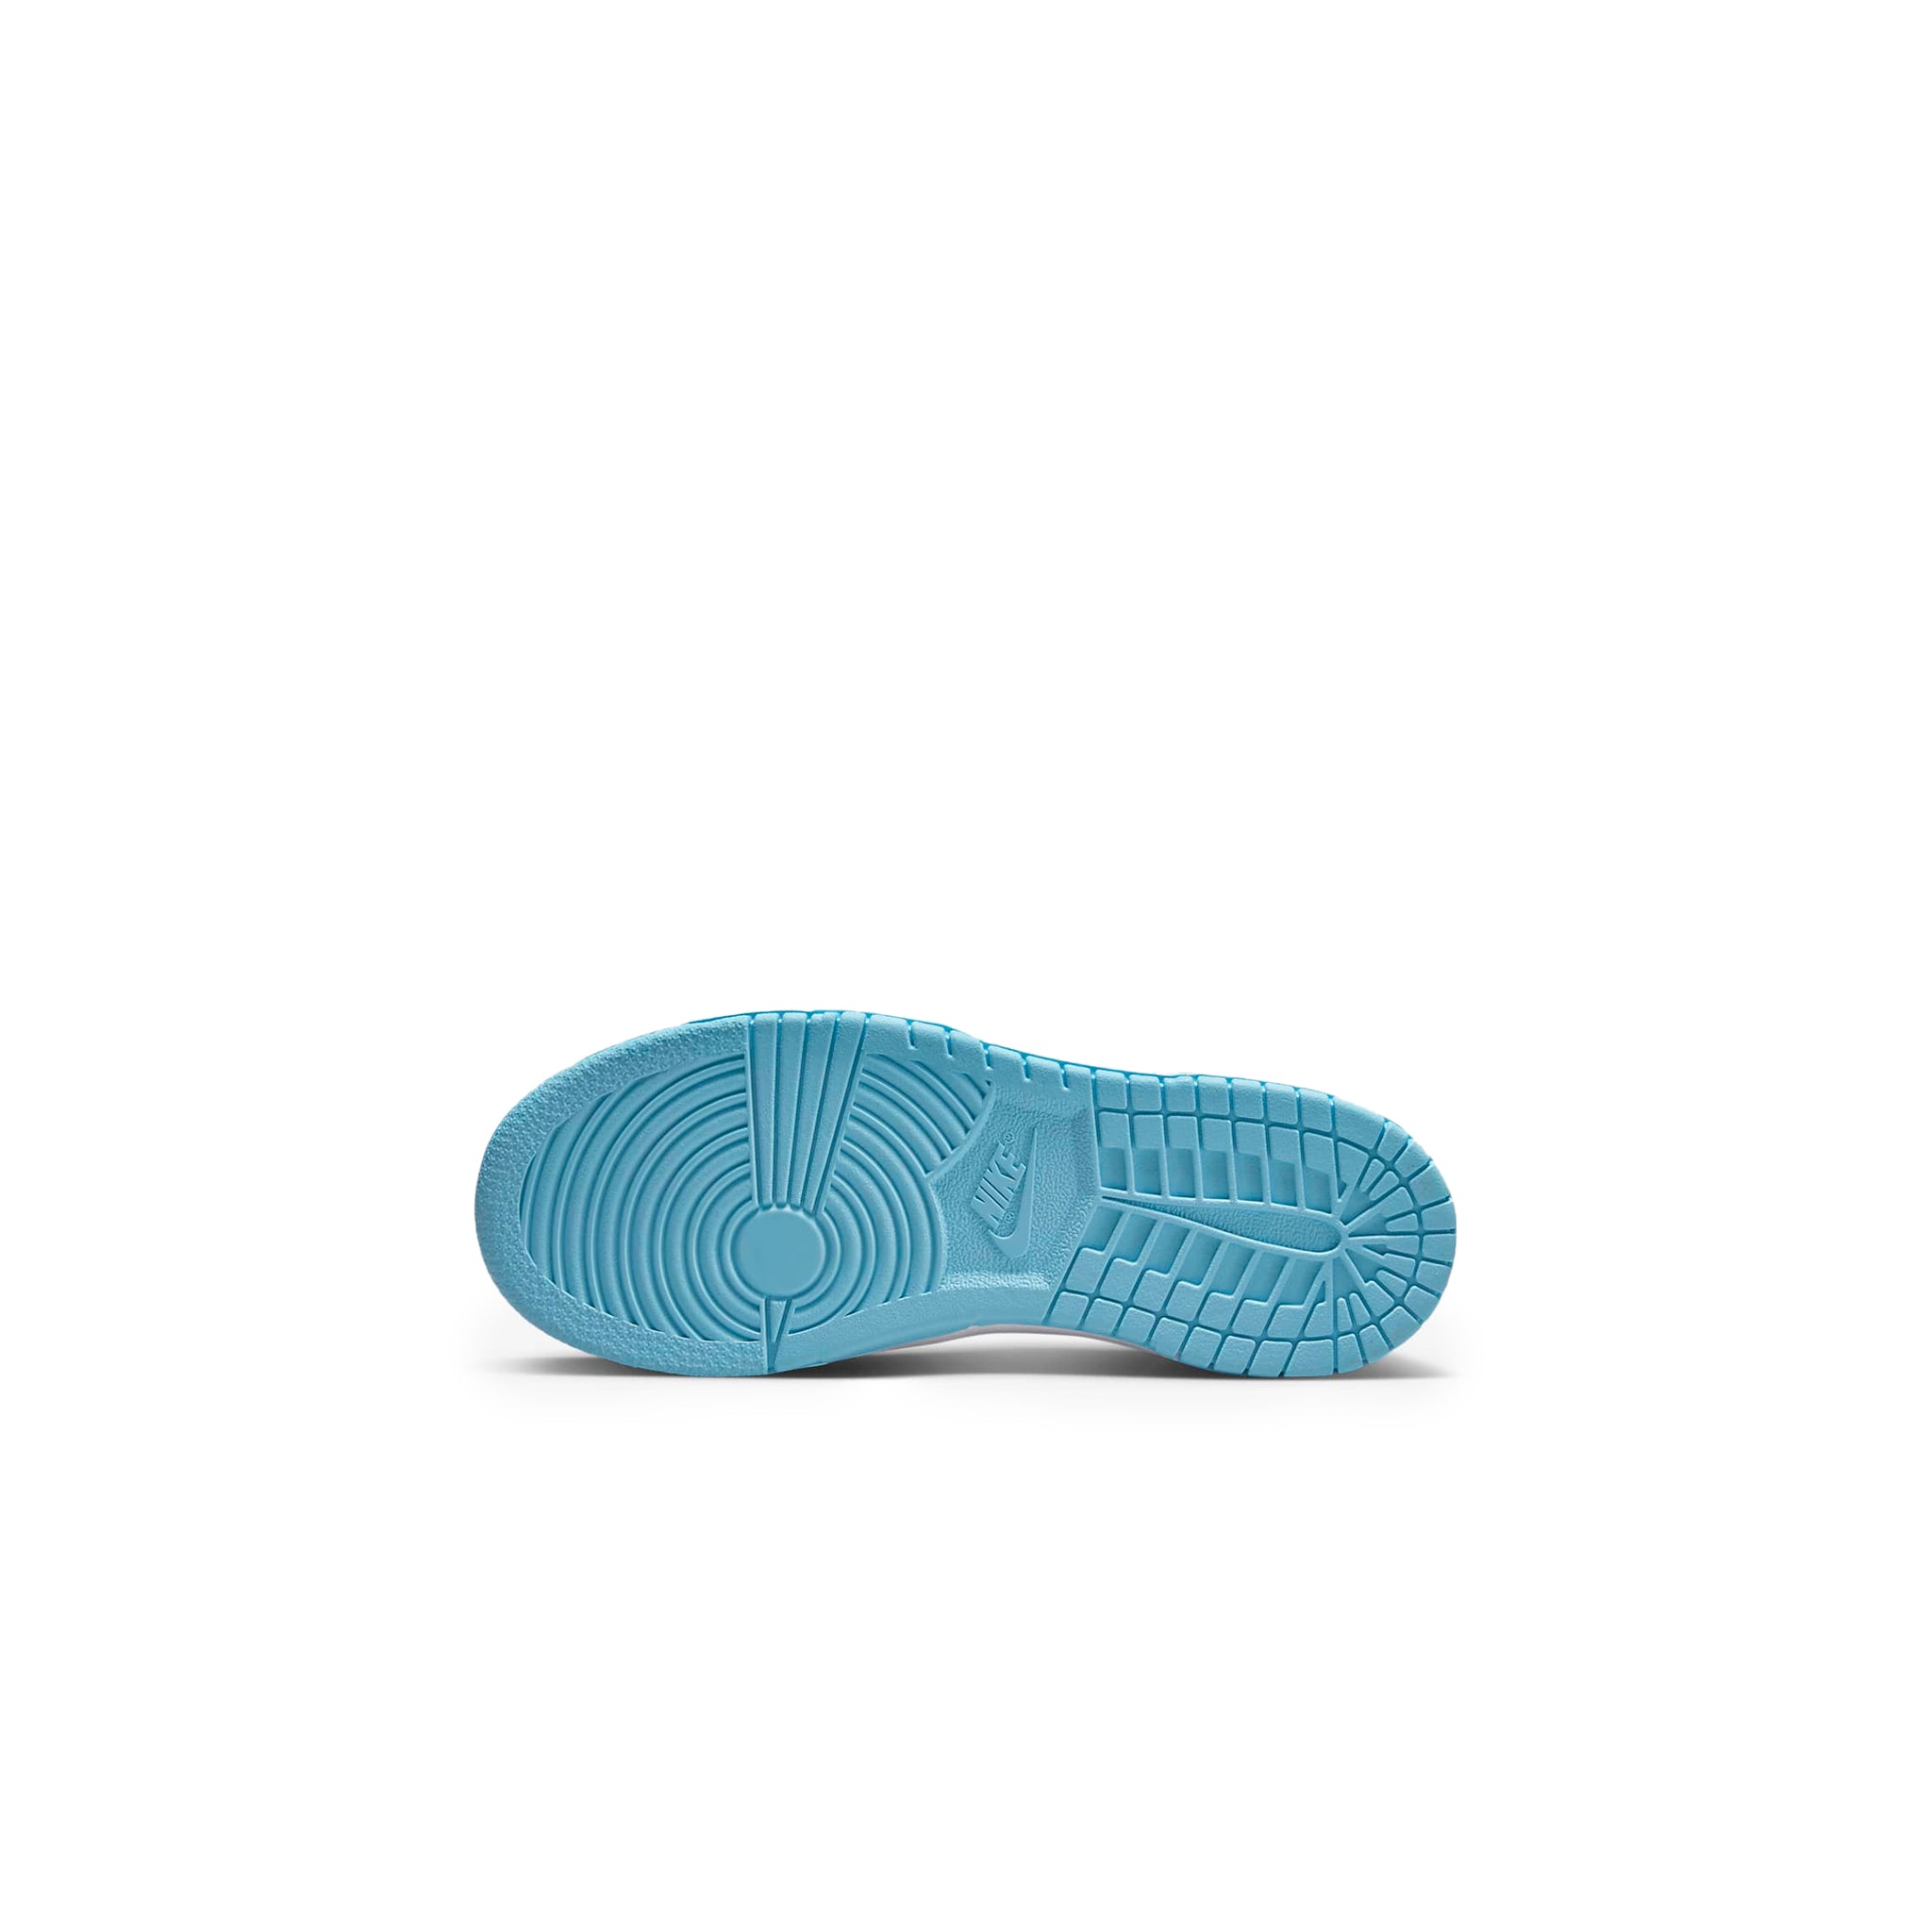 Sole view of Nike Dunk Low Retro QS Flash White Argon Blue Flash (PS) DV2635-400